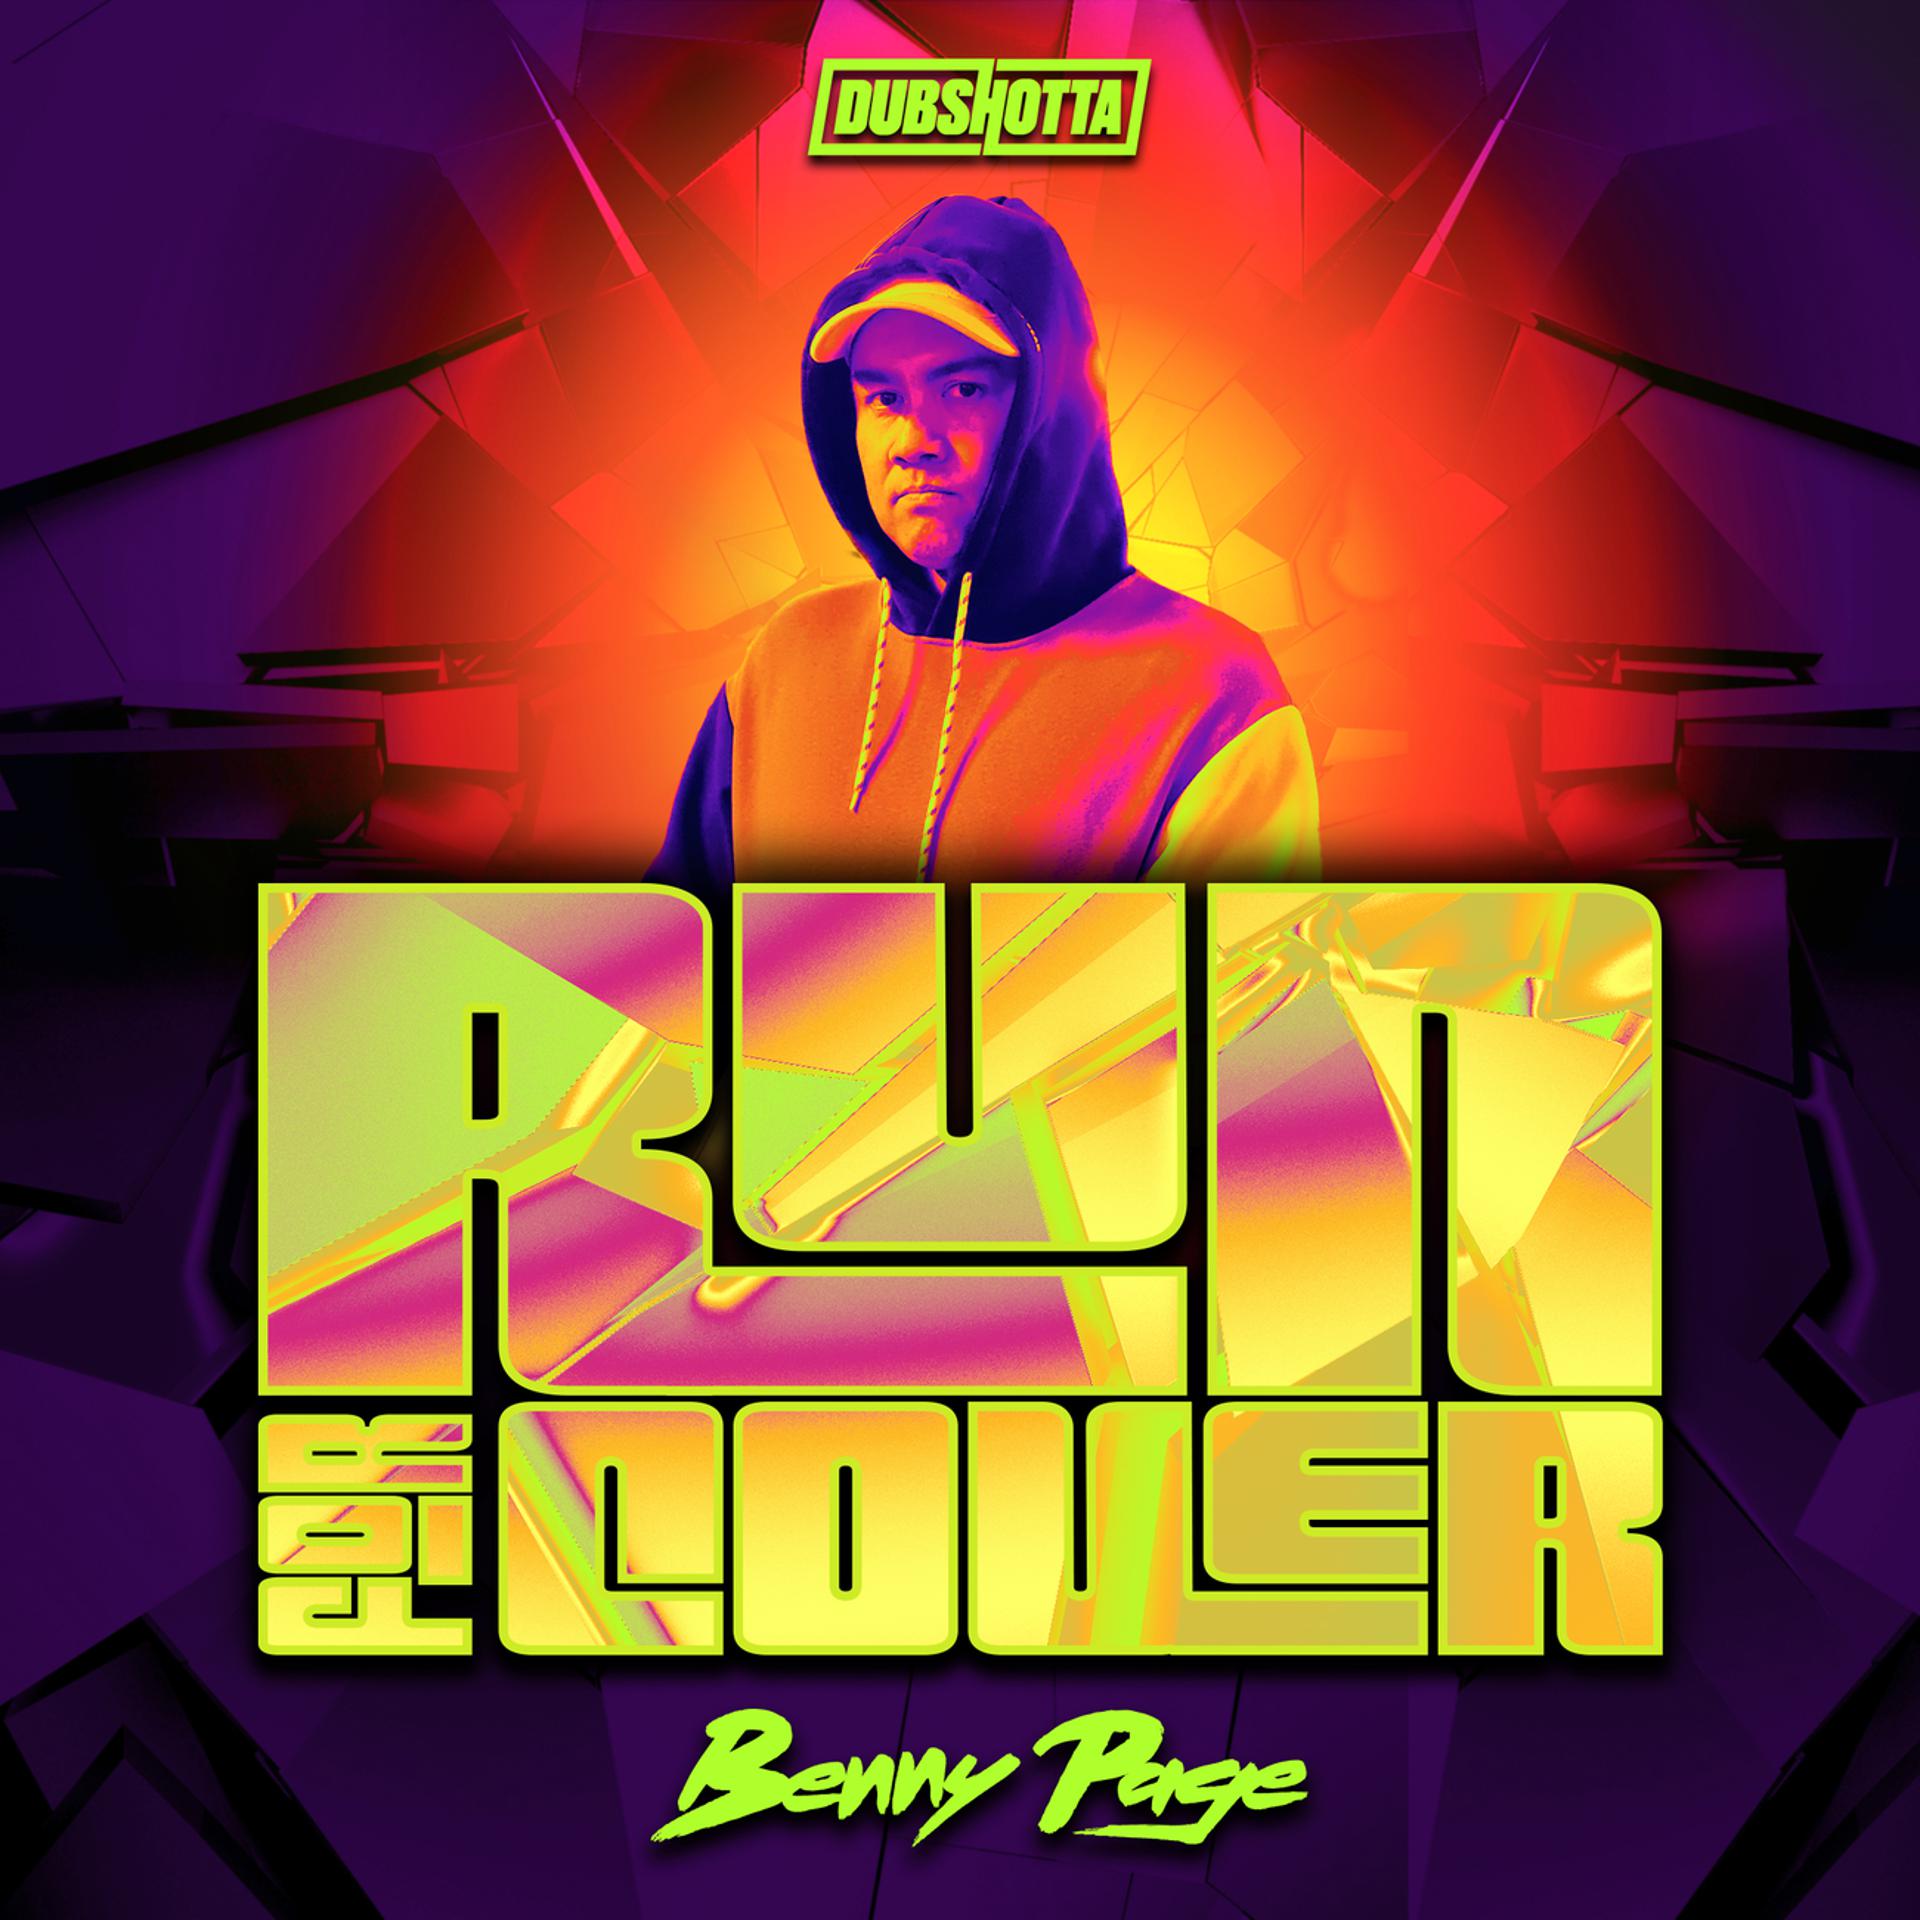 Постер альбома Run For Cover